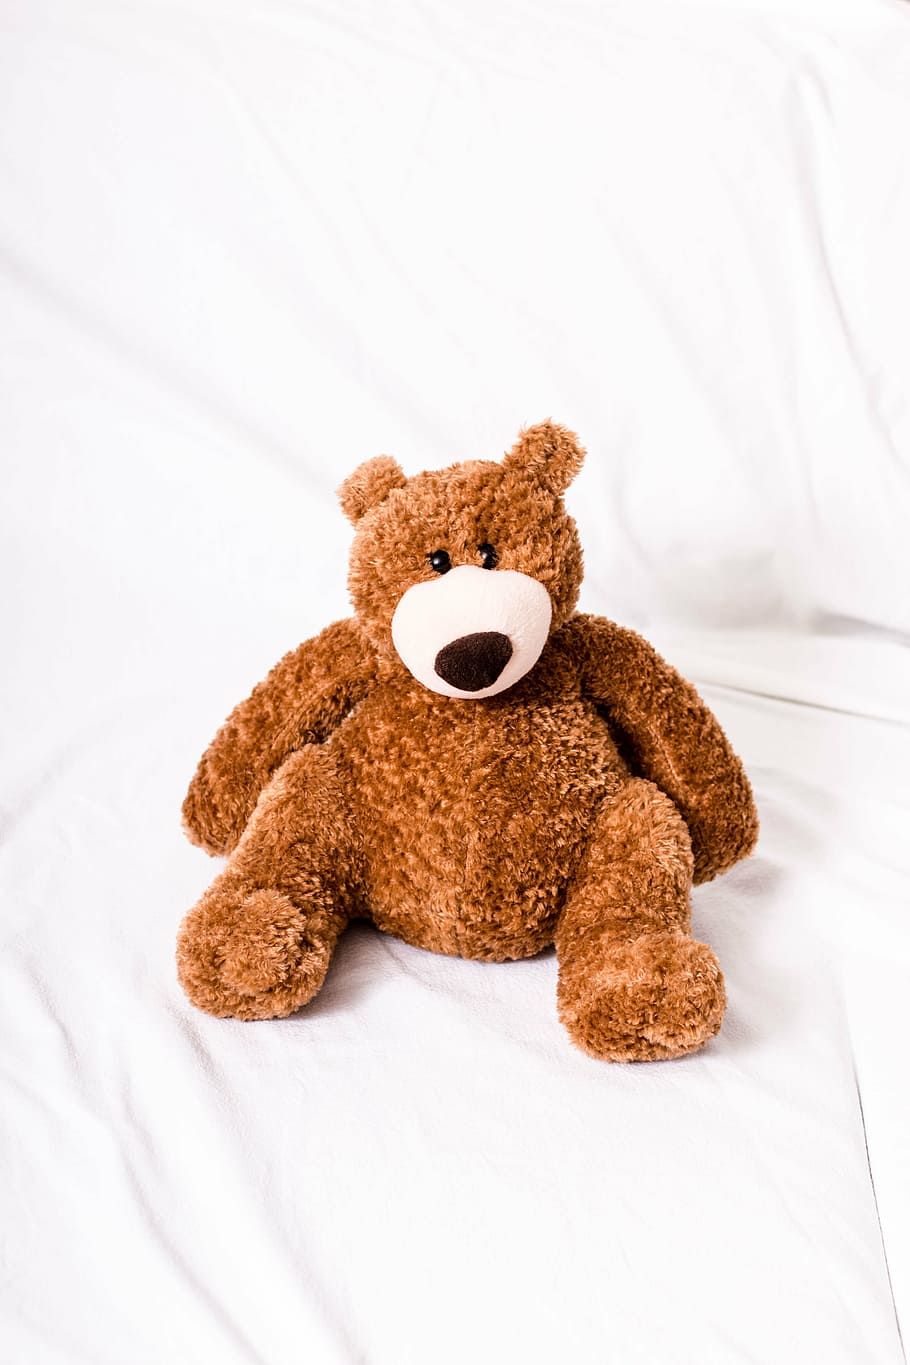 teddy, teddy bear, bear, soft toy, stuffed animals, stuffed animal, bears, sweet, cute, snuggle